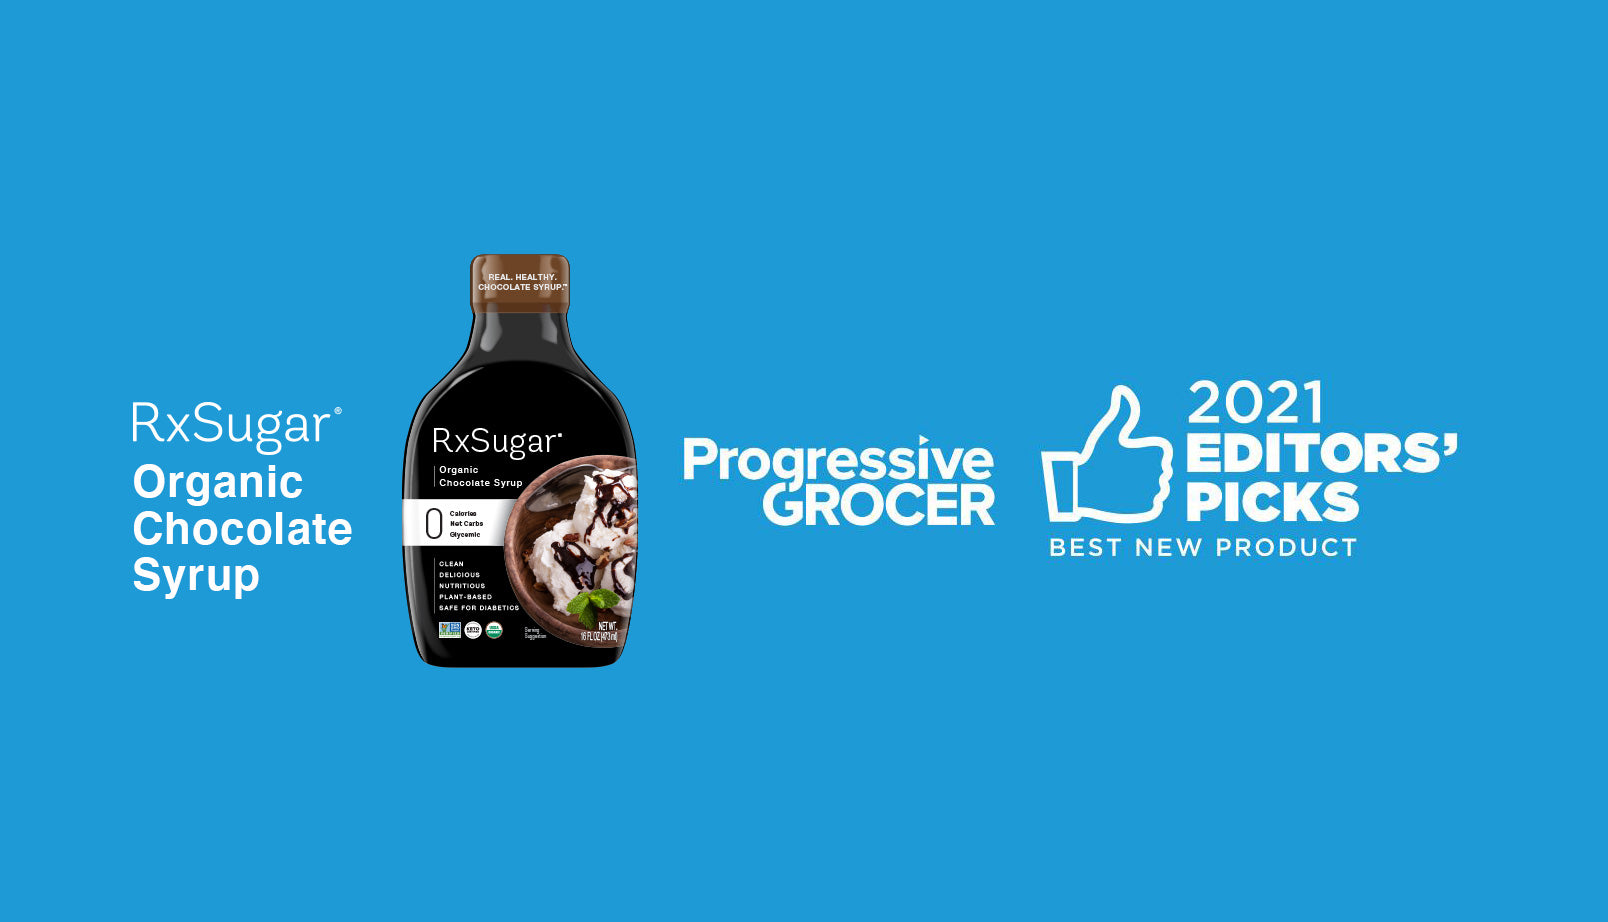 RxSugar® Organic Chocolate Syrup Wins Progressive Grocer Editors’ Pick Award